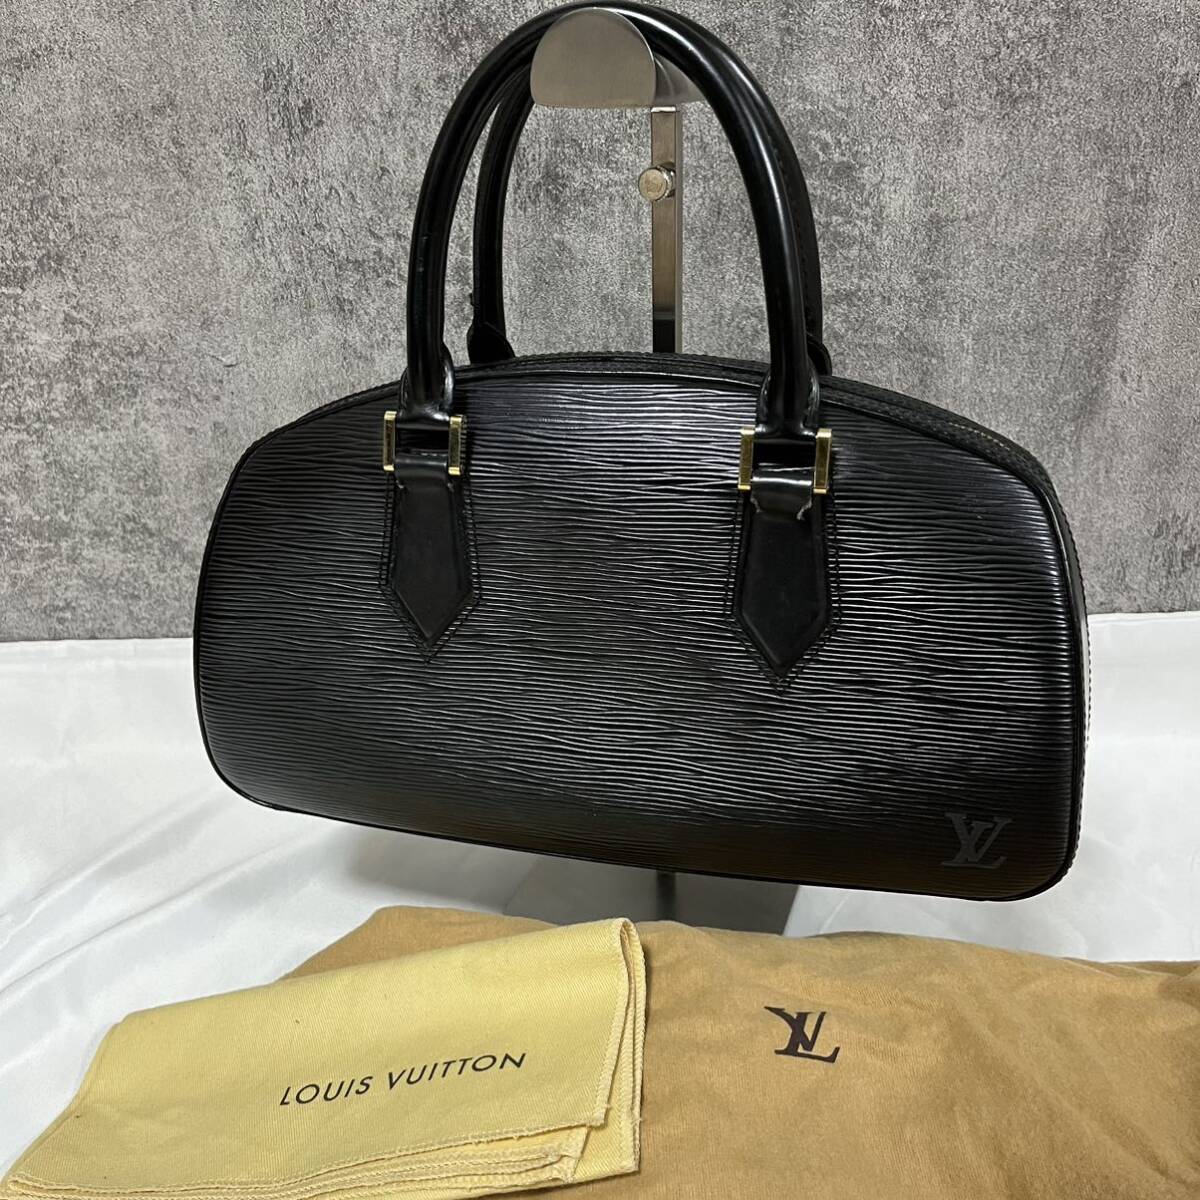  Louis Vuitton LOUIS VUITTON ручная сумочка M52082 жасмин кожа (LV Logo. печать ввод )nowa-ruTH0969 epi 1 иен старт черный 